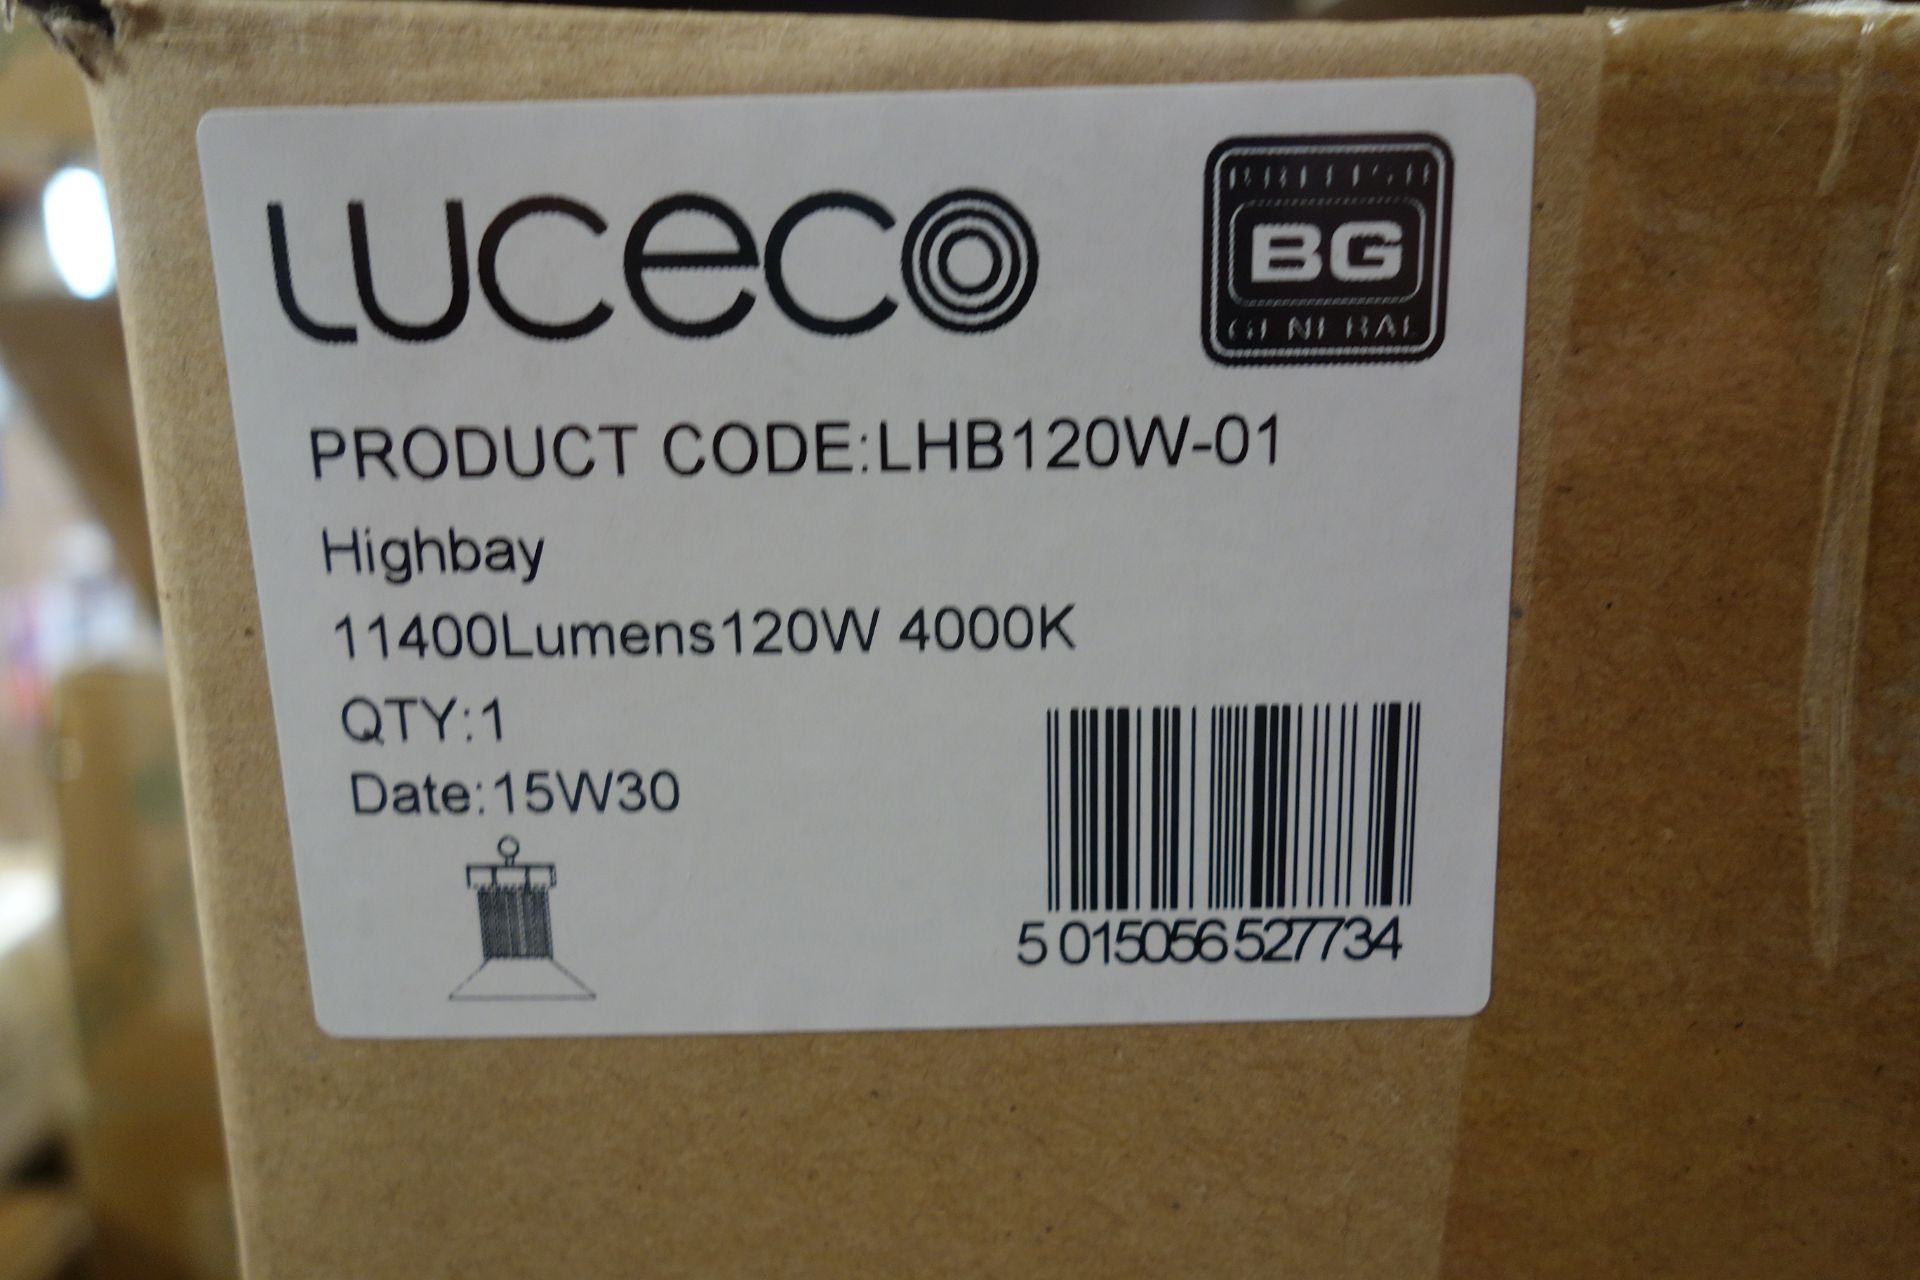 2 x Luceco LHB1201-01 High Bay 120W 11400 Lumens 4000K C/W Beam Reflector. Black Finish